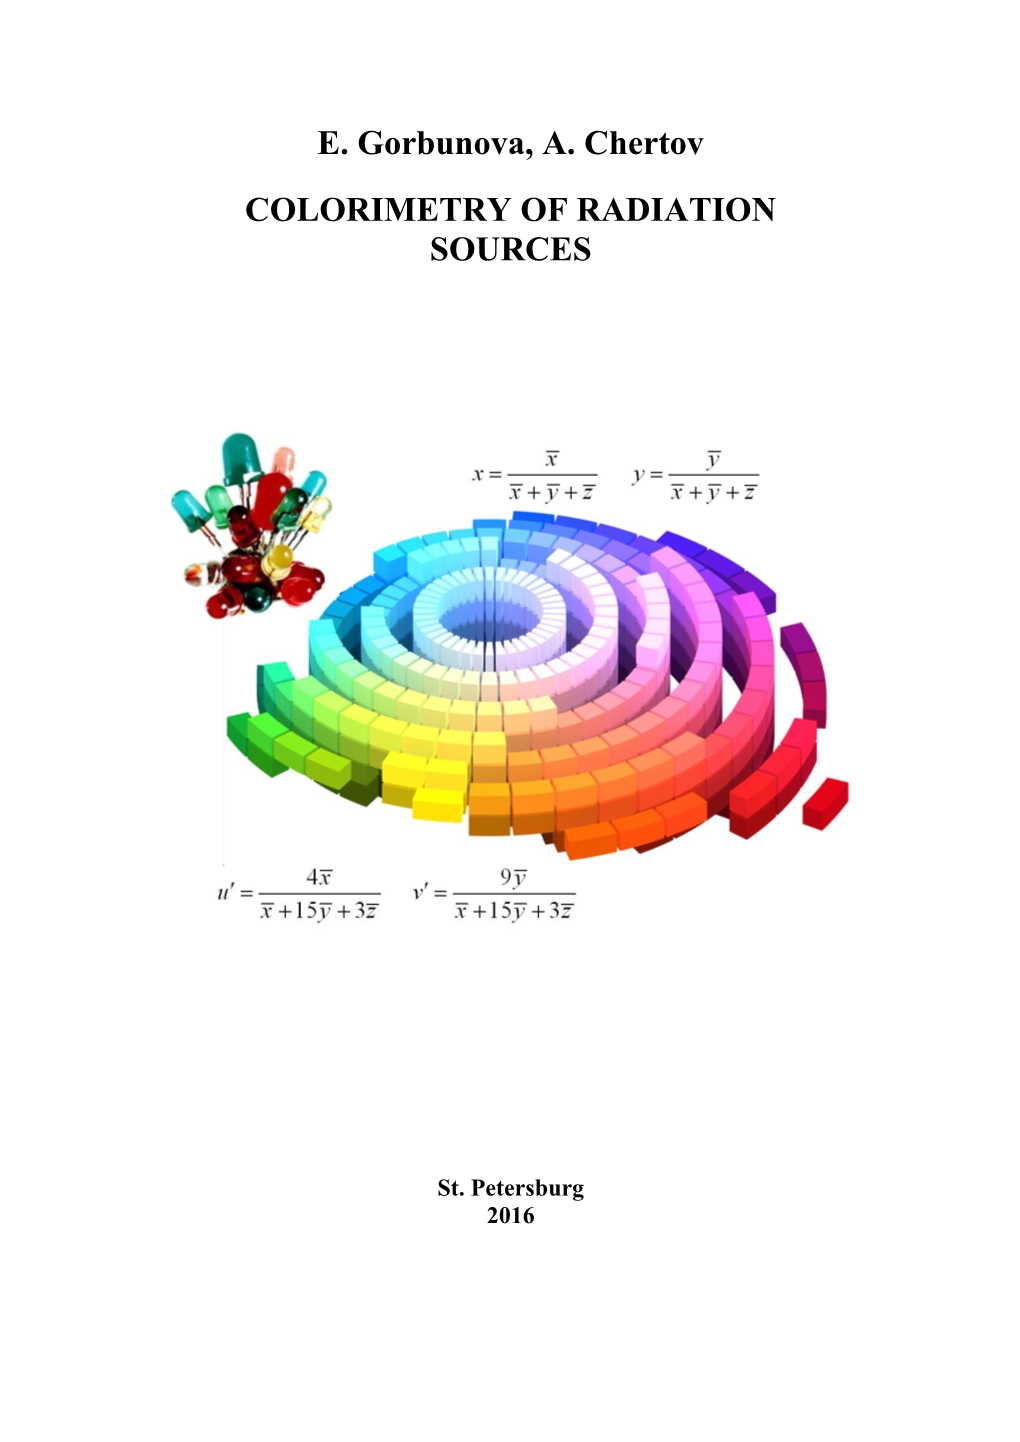 E. Gorbunova, A. Chertov Colorimetry of Radiation Sources